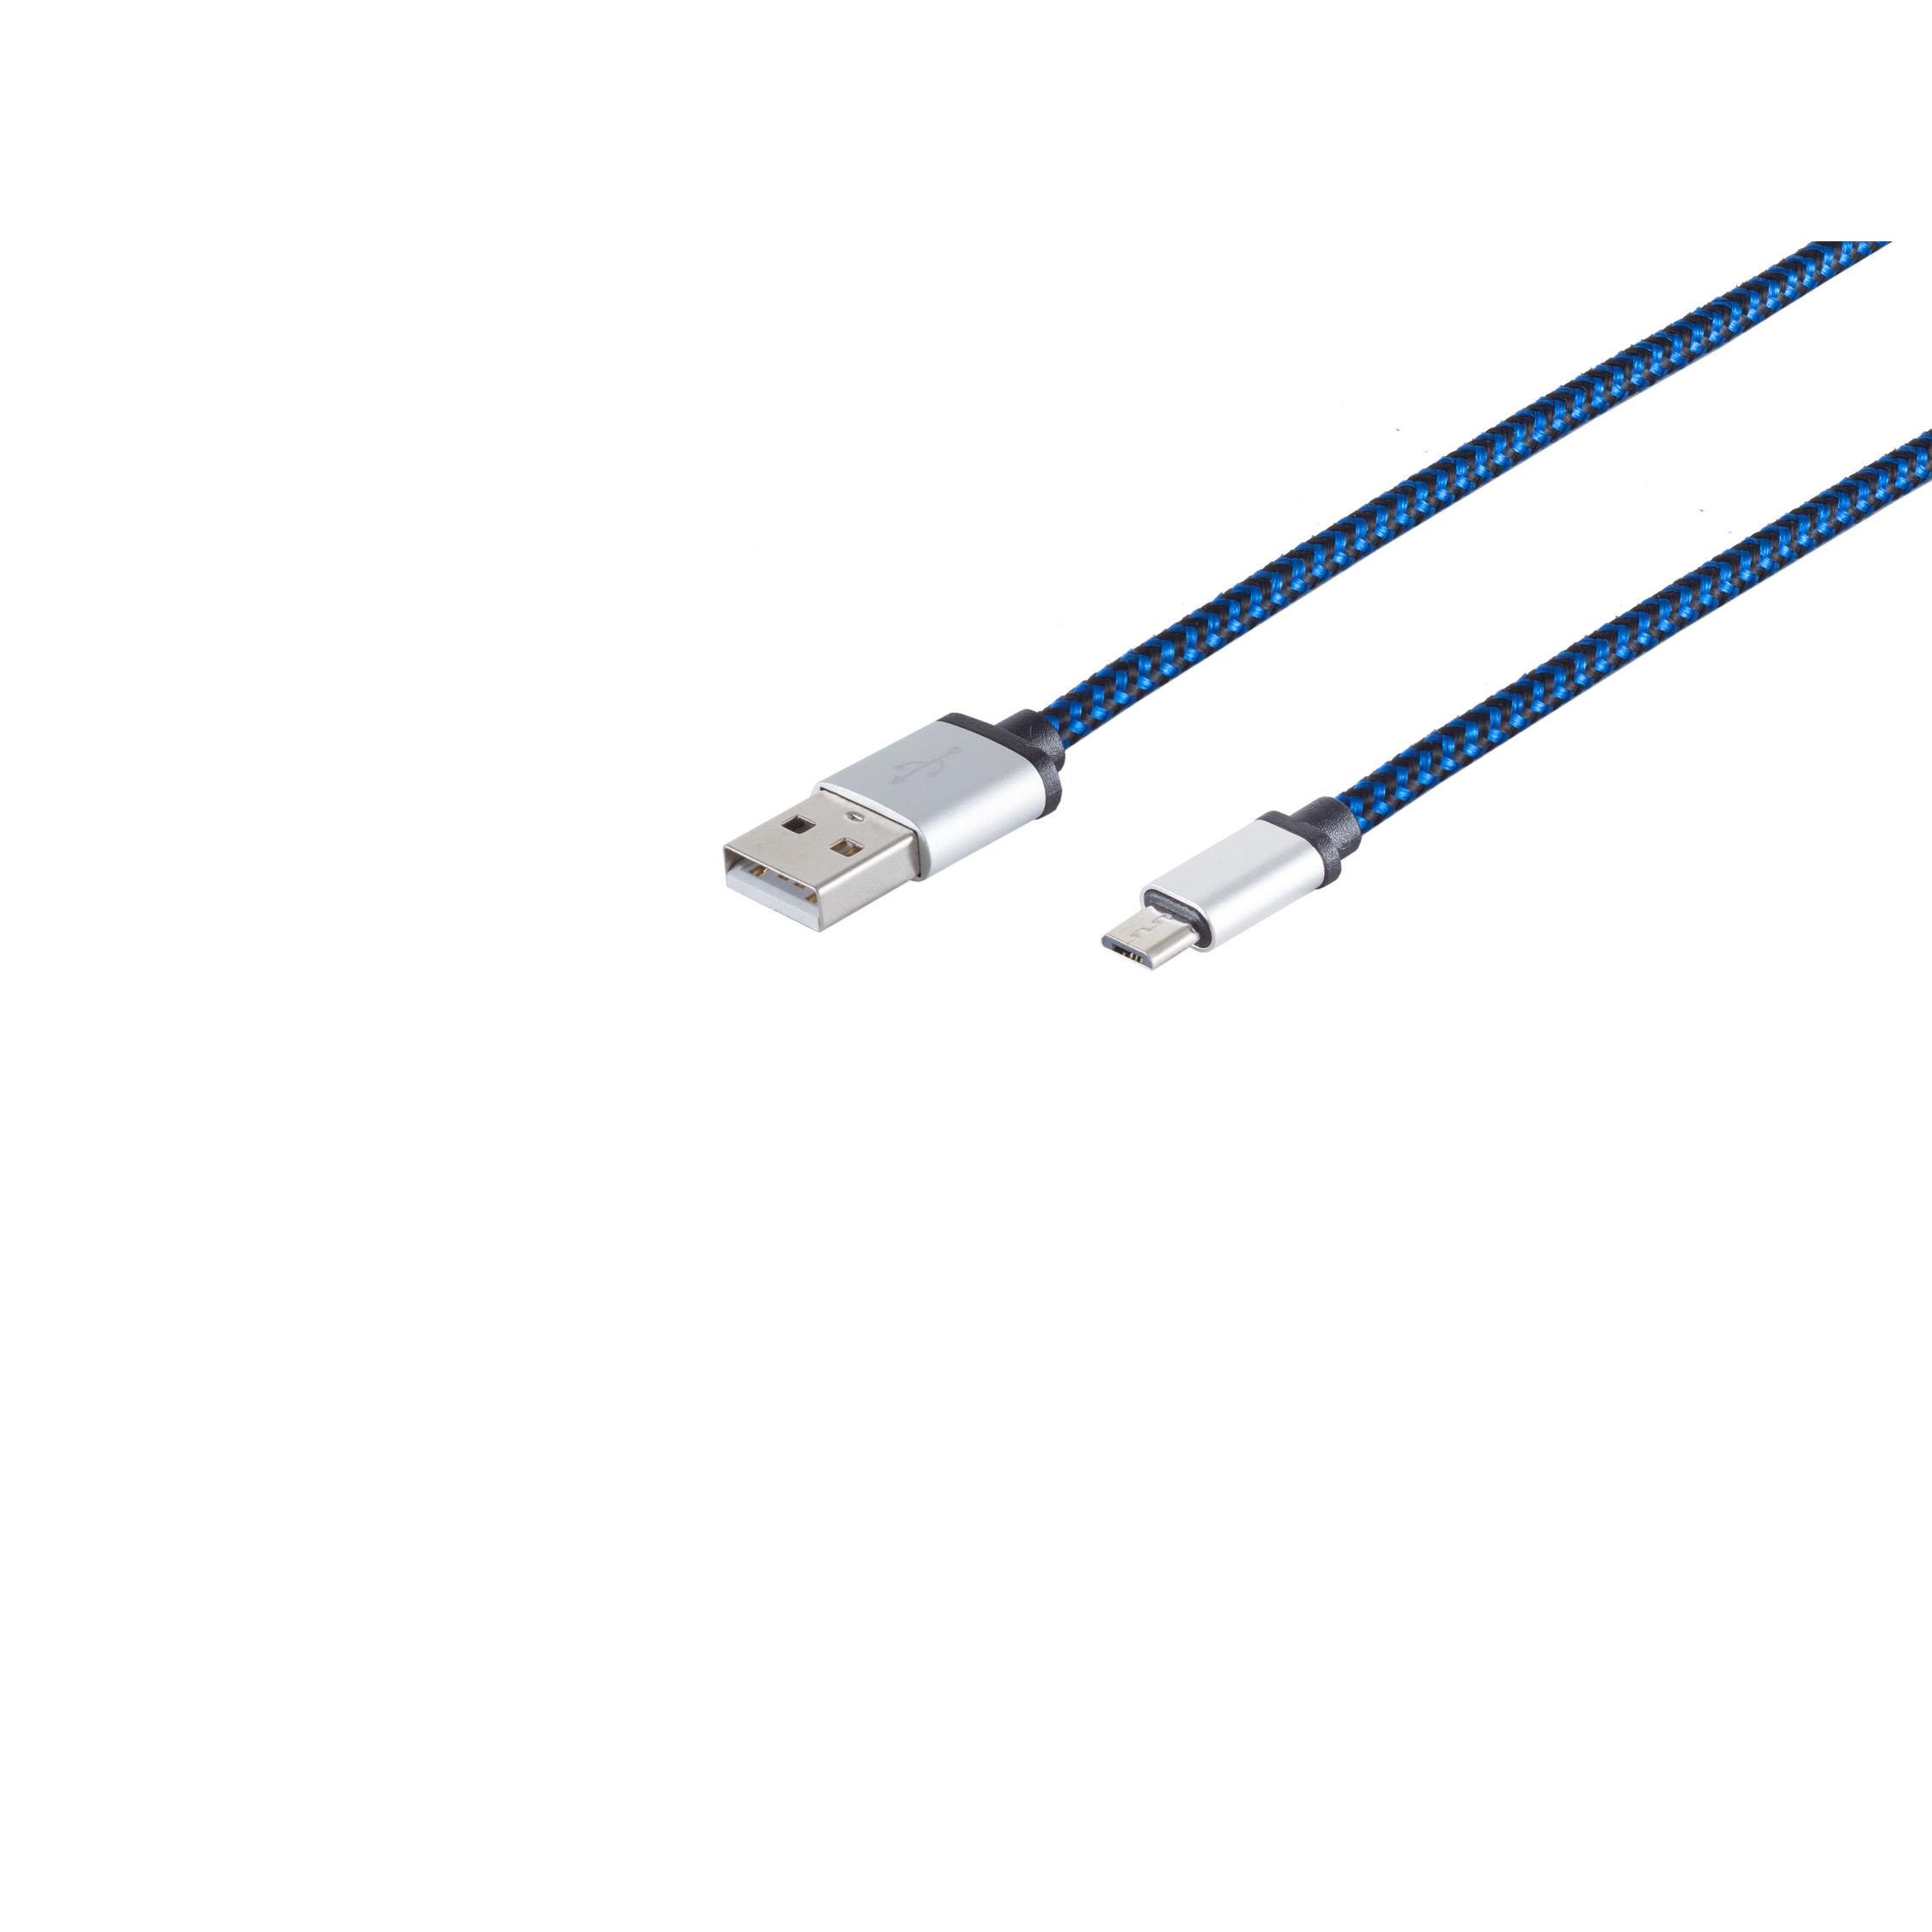 USB USB blau Stecker Kabel USB-Ladekabel auf B, CONNECTIVITY Micro S/CONN A 2m MAXIMUM